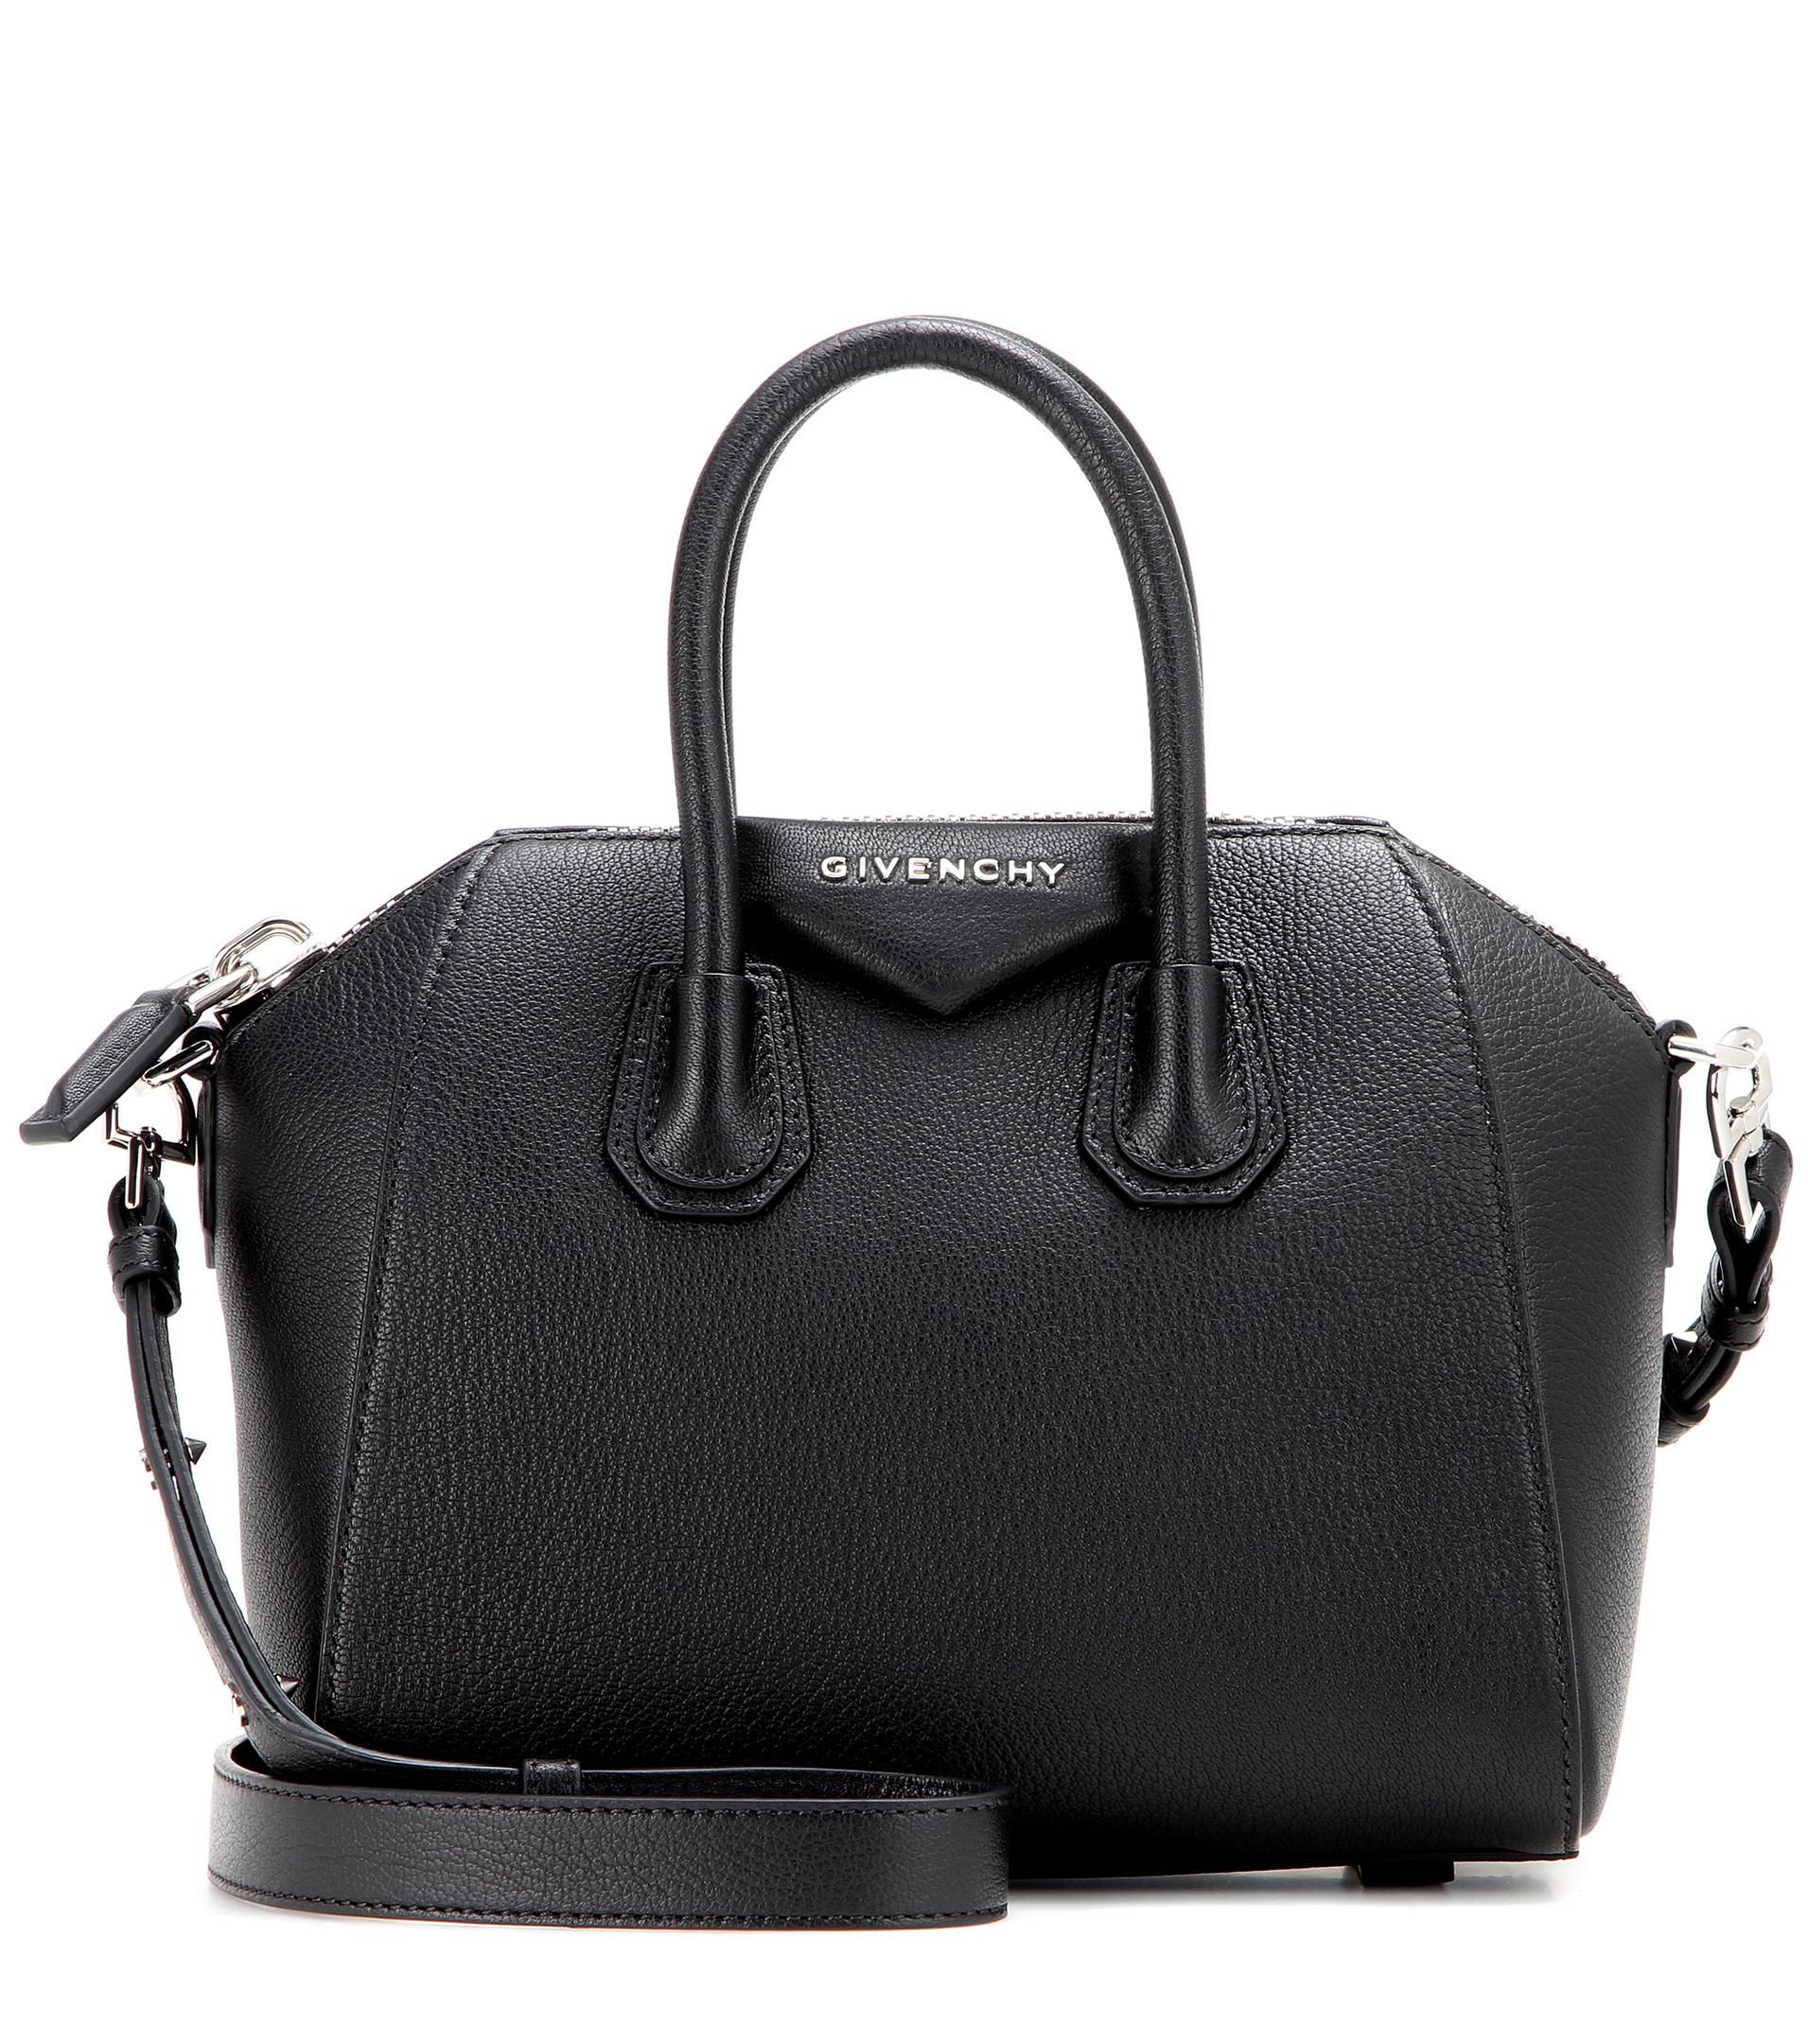 Givenchy Antigona Mini Leather Shoulder Bag in Black - Lyst